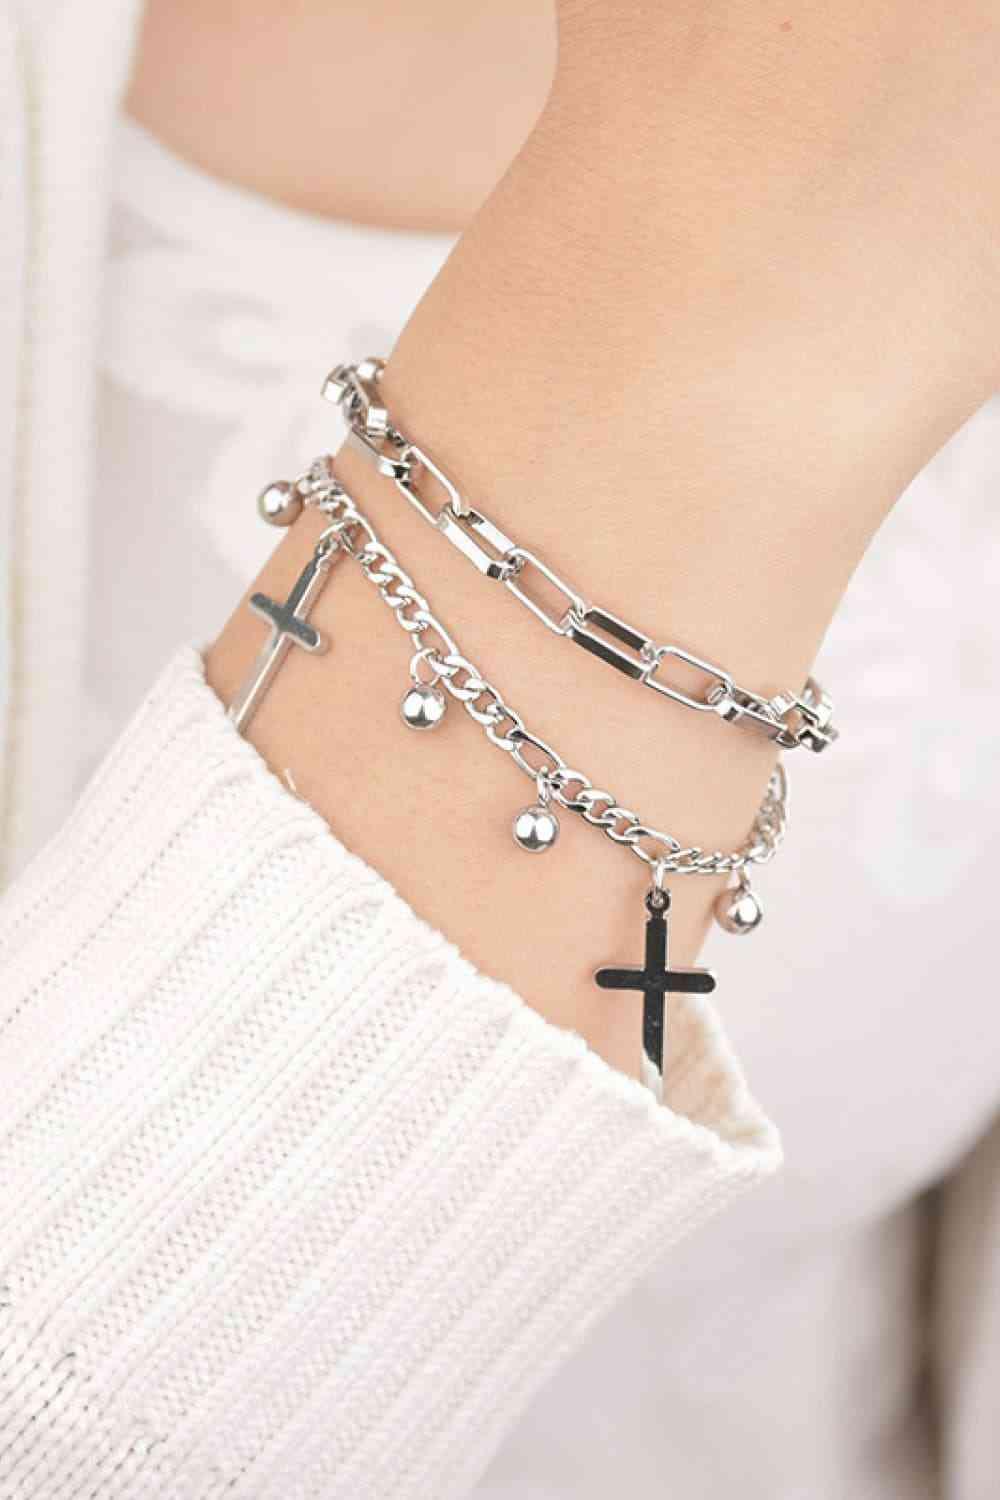 Bracelets & Wrist Wraps - God's Girl Gifts And Apparel